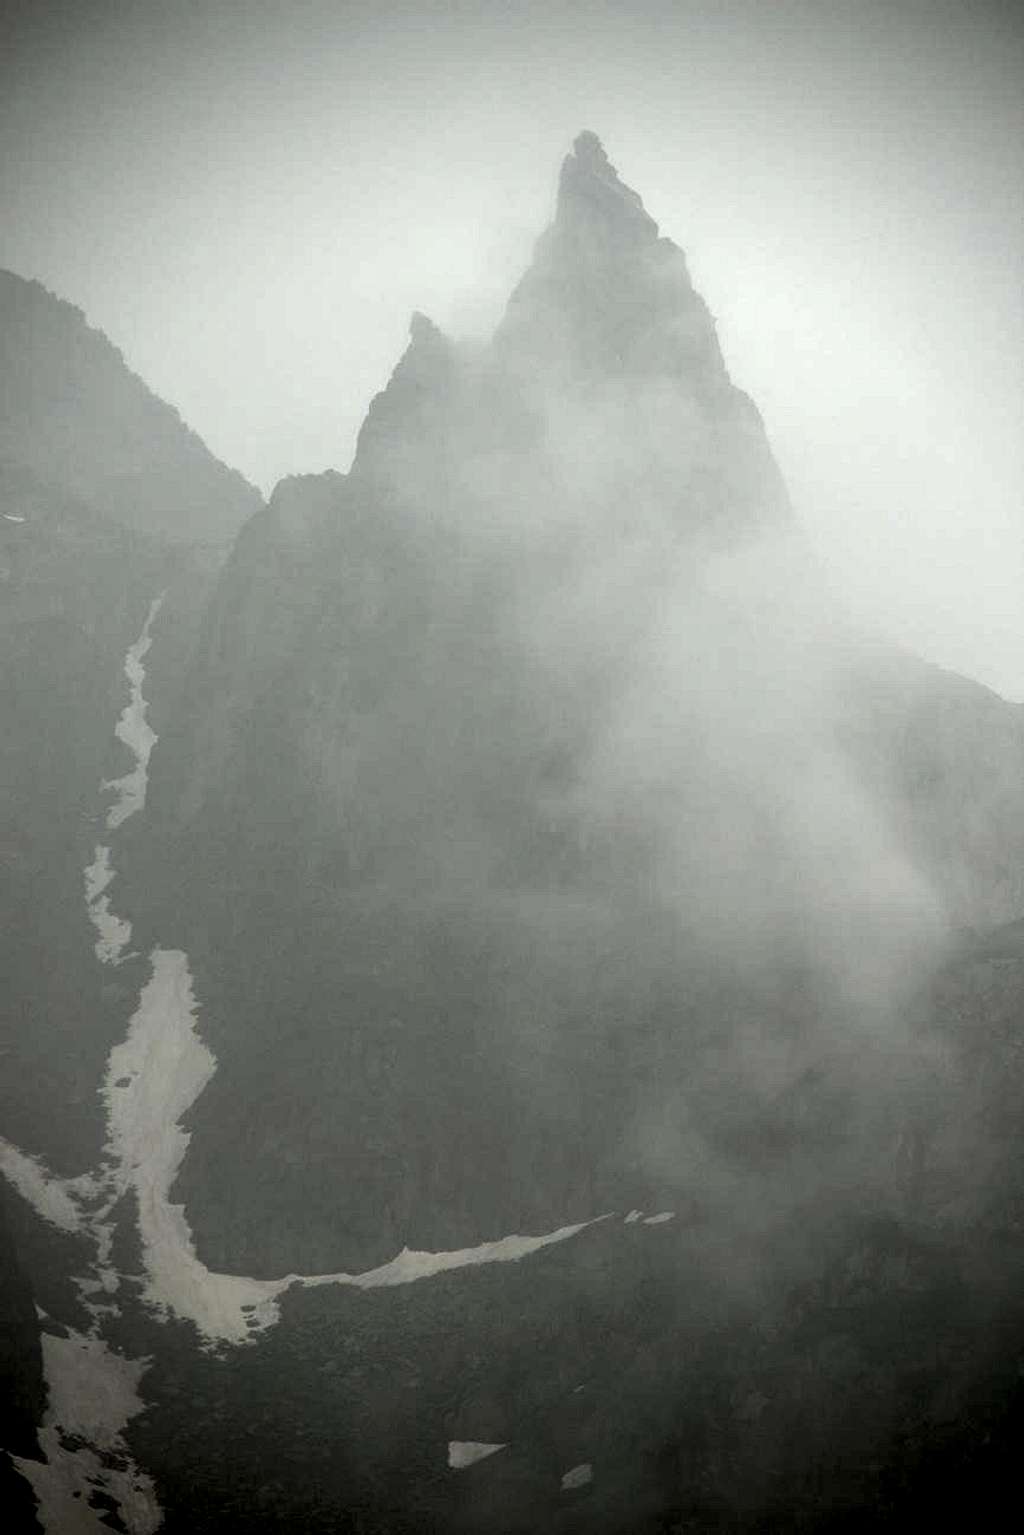 Mt.Mnich in stormy mist